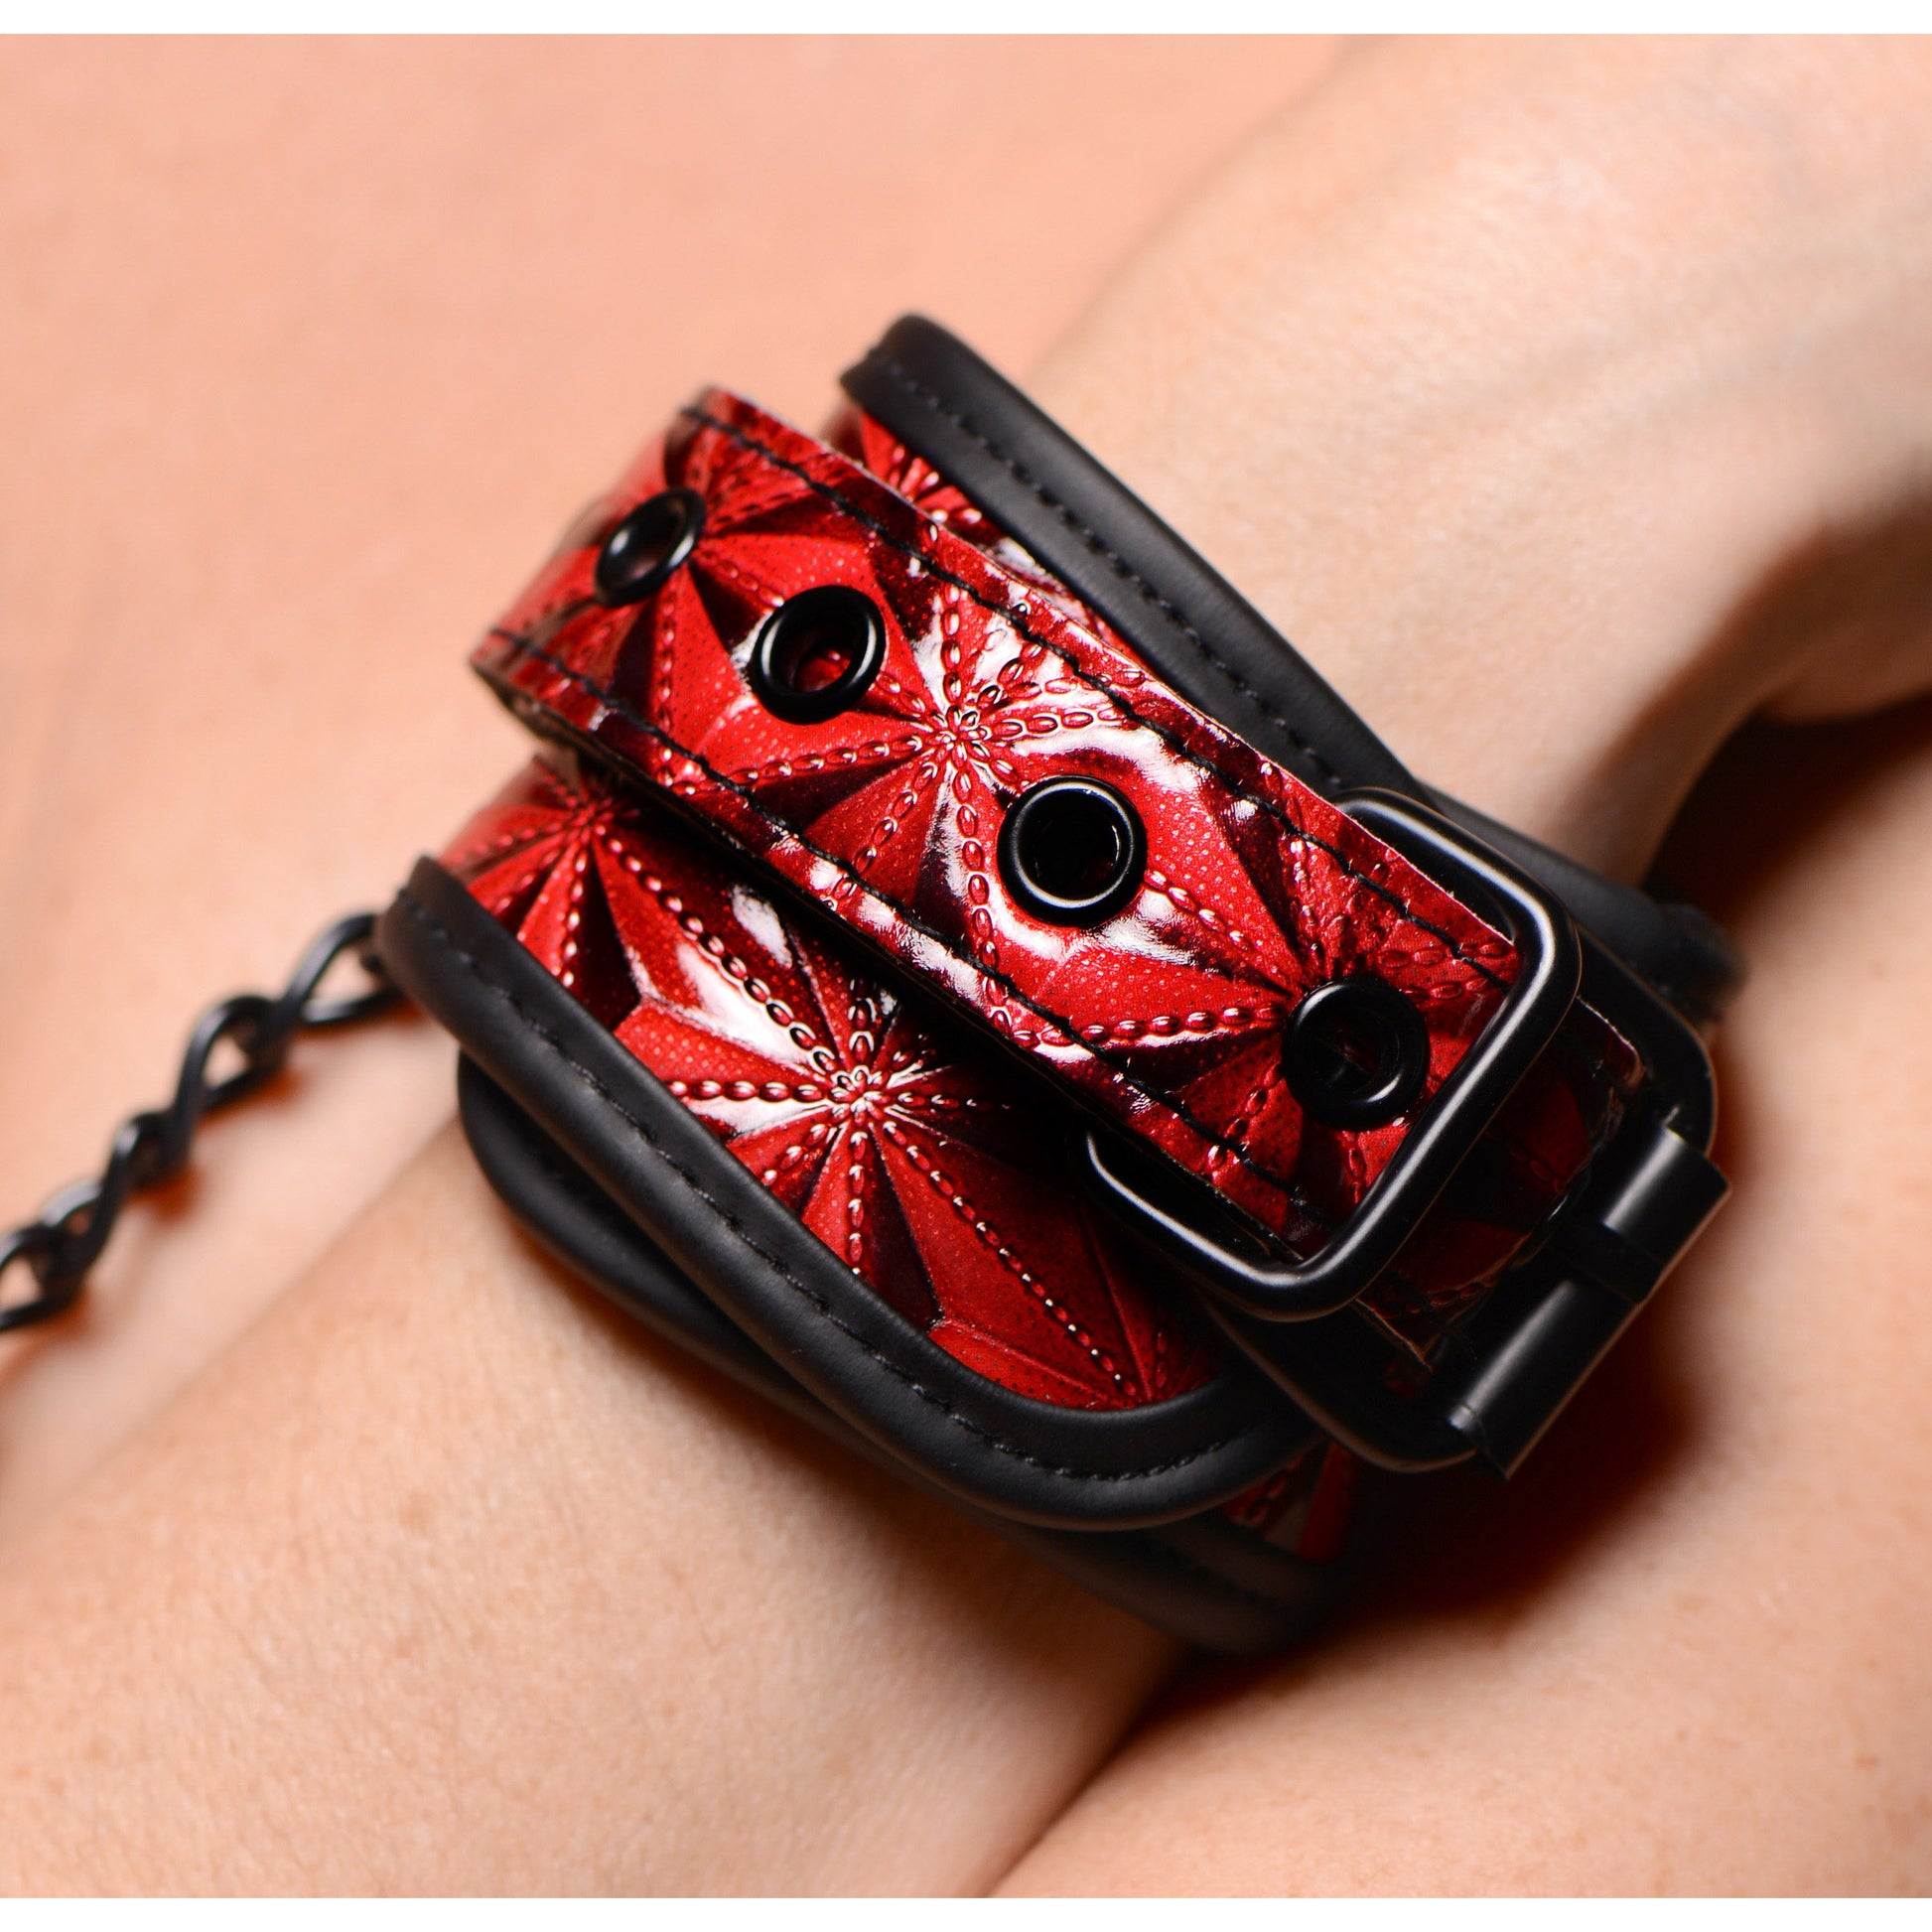 Crimson Tied Embossed Wrist Cuffs - UABDSM